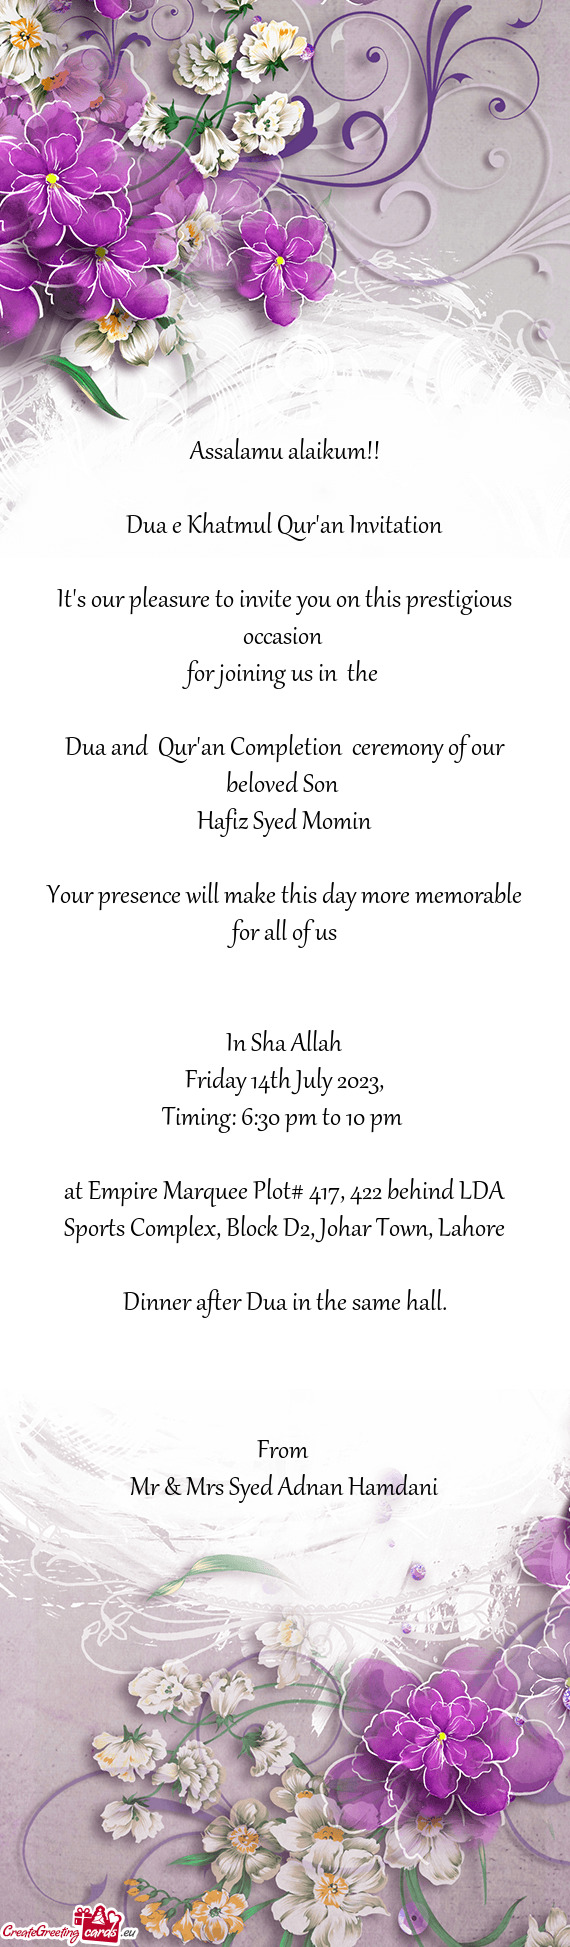 Dua e Khatmul Qur'an Invitation